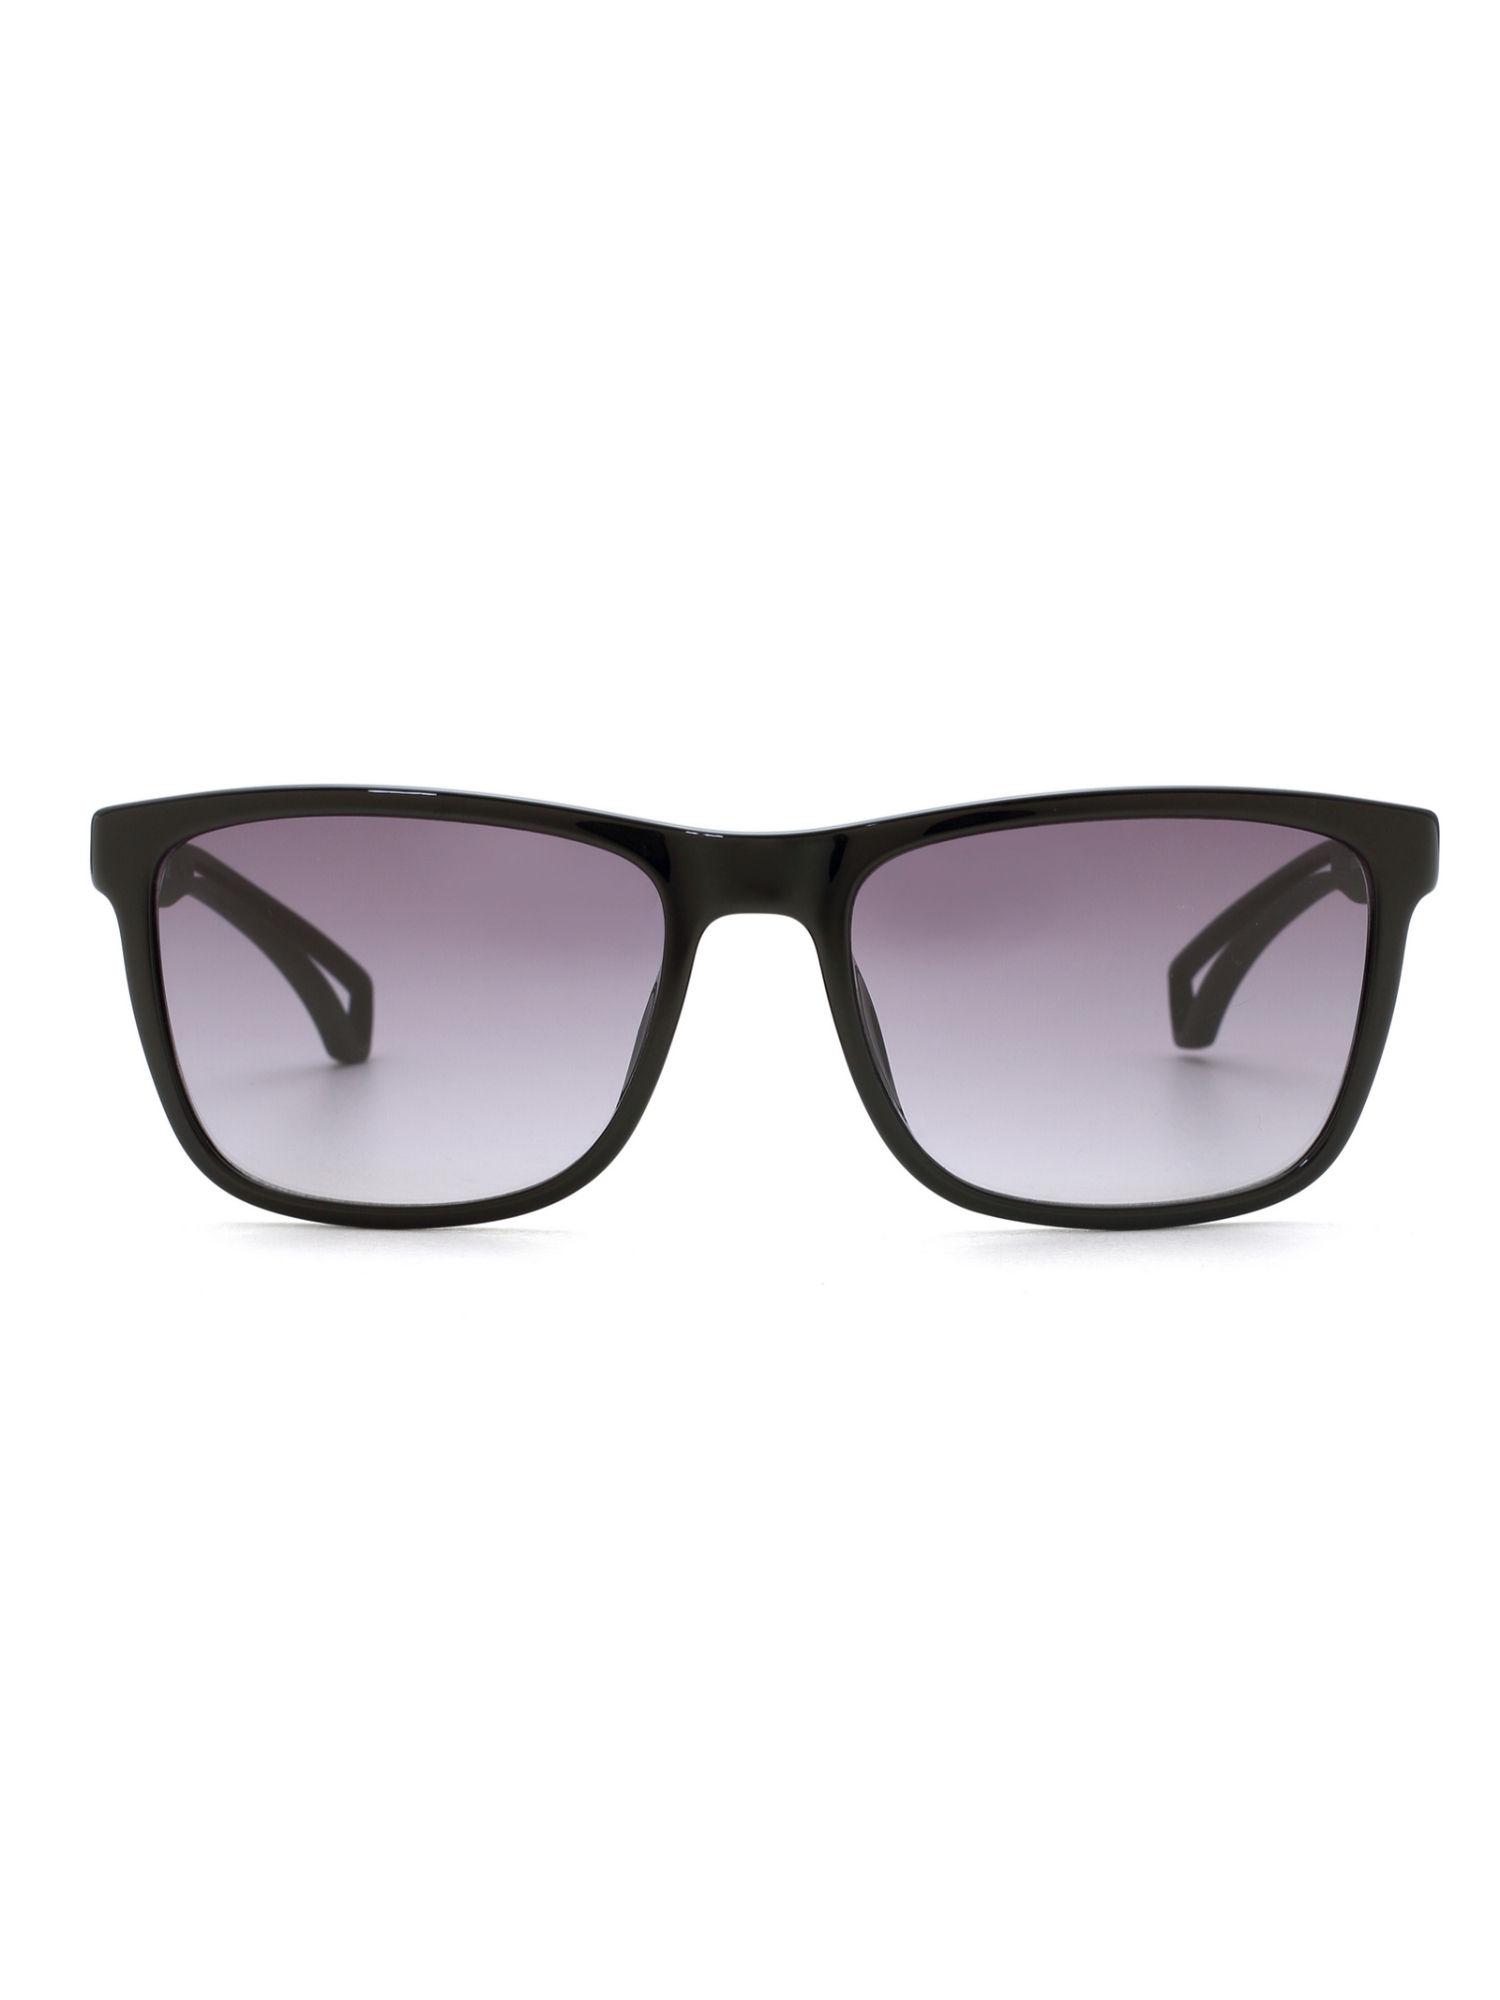 square sunglasses with purple lens for men